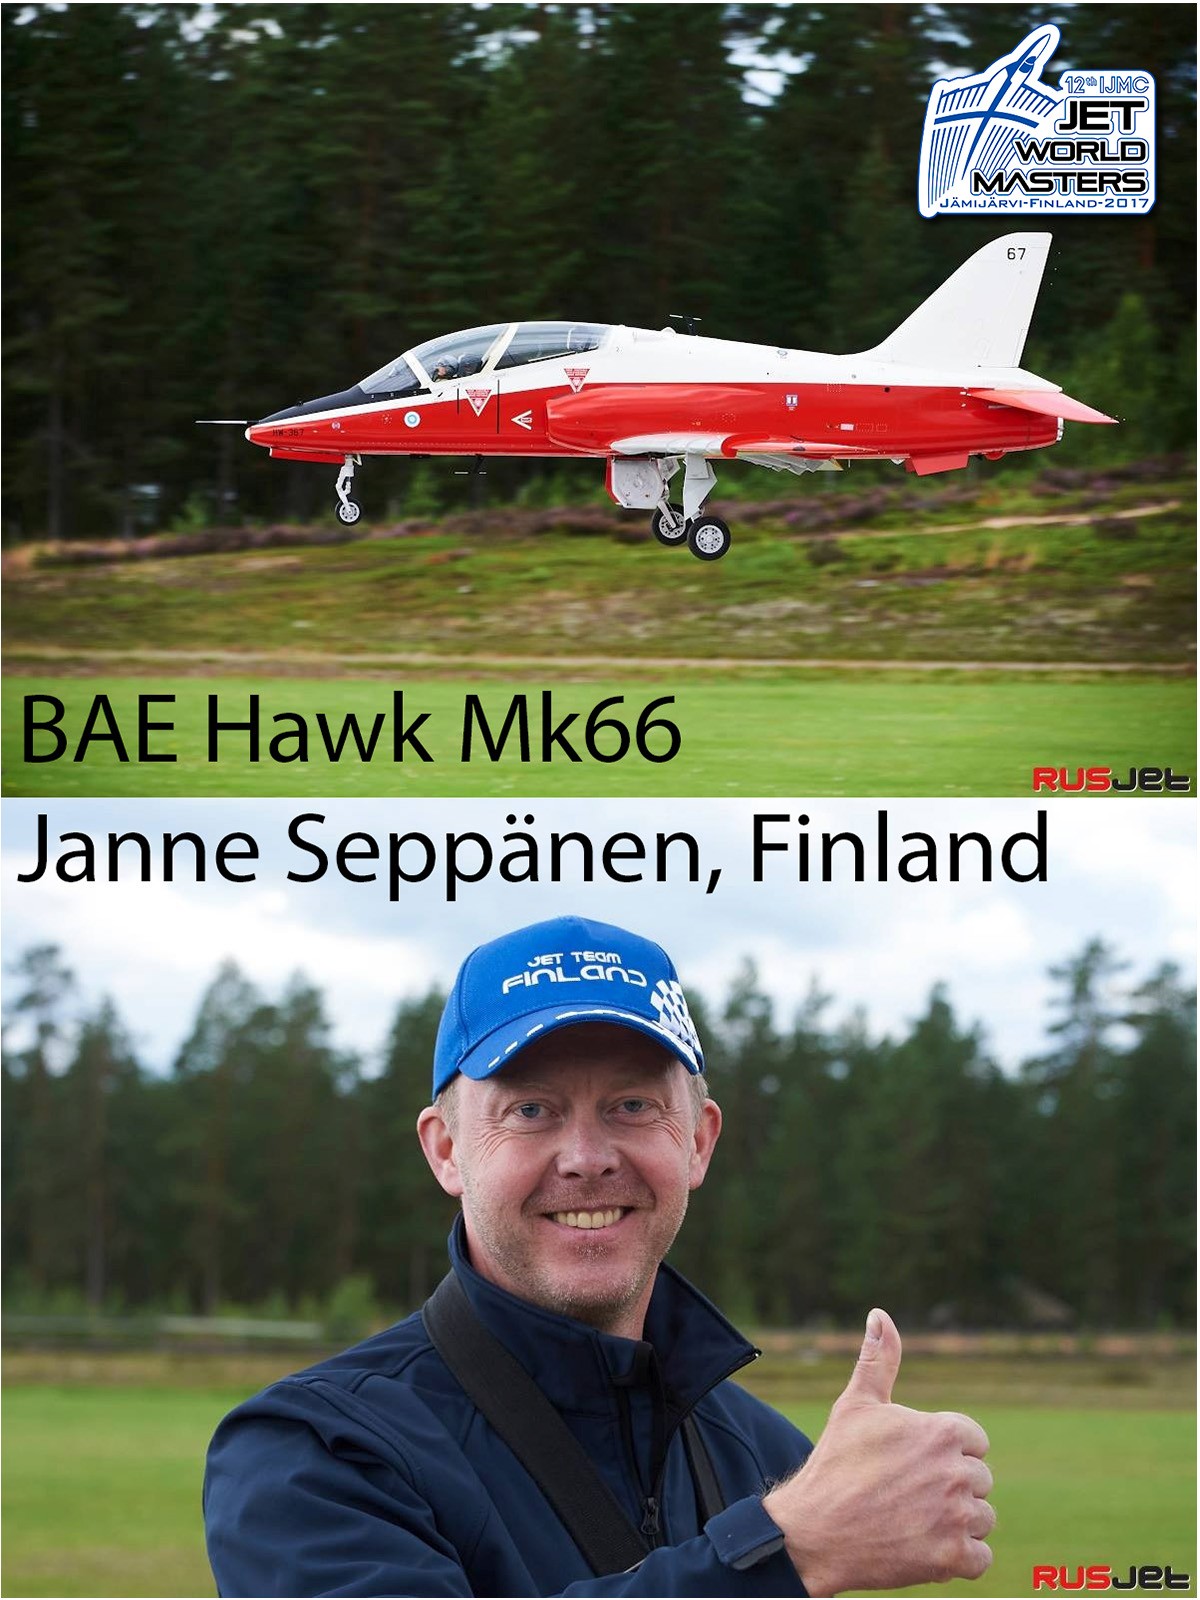 Finland Janne Seppanen.jpg(279 KB)